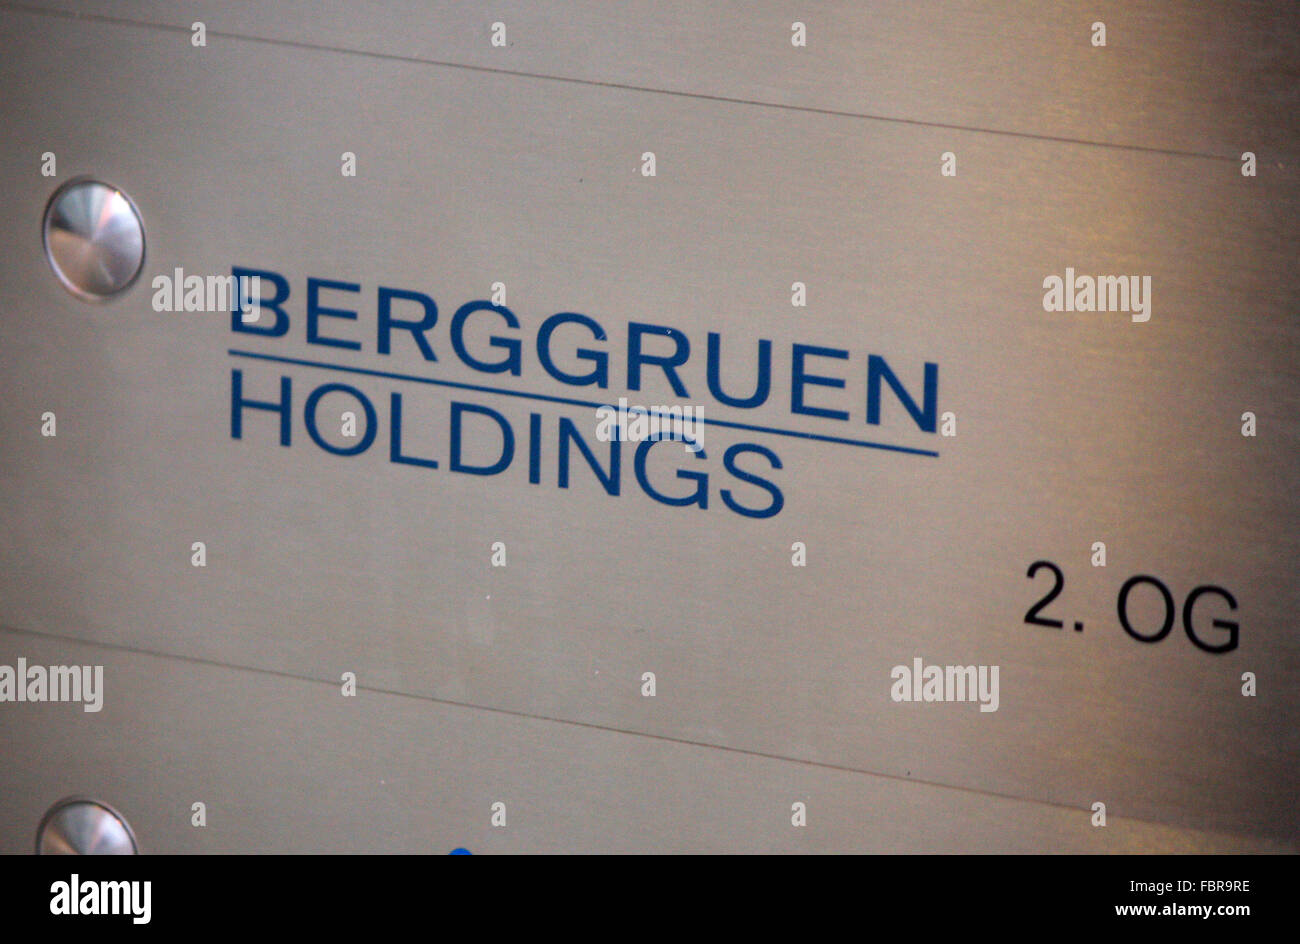 Markenname: "Berggruen Holdings", Berlin. Stockfoto